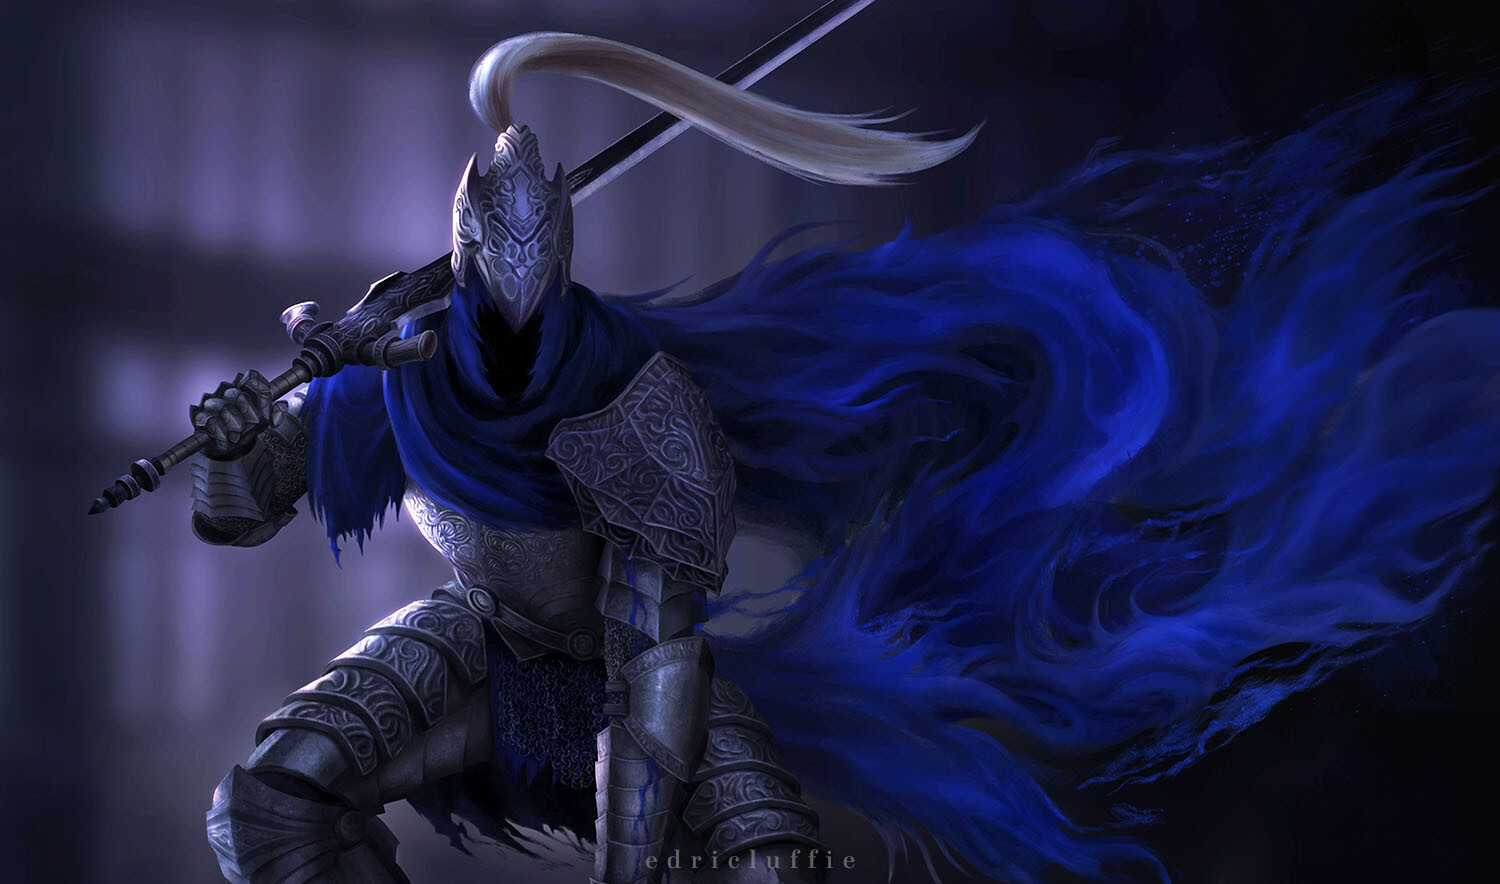 Knight Artorias, the Wolf Knight of Dark Souls